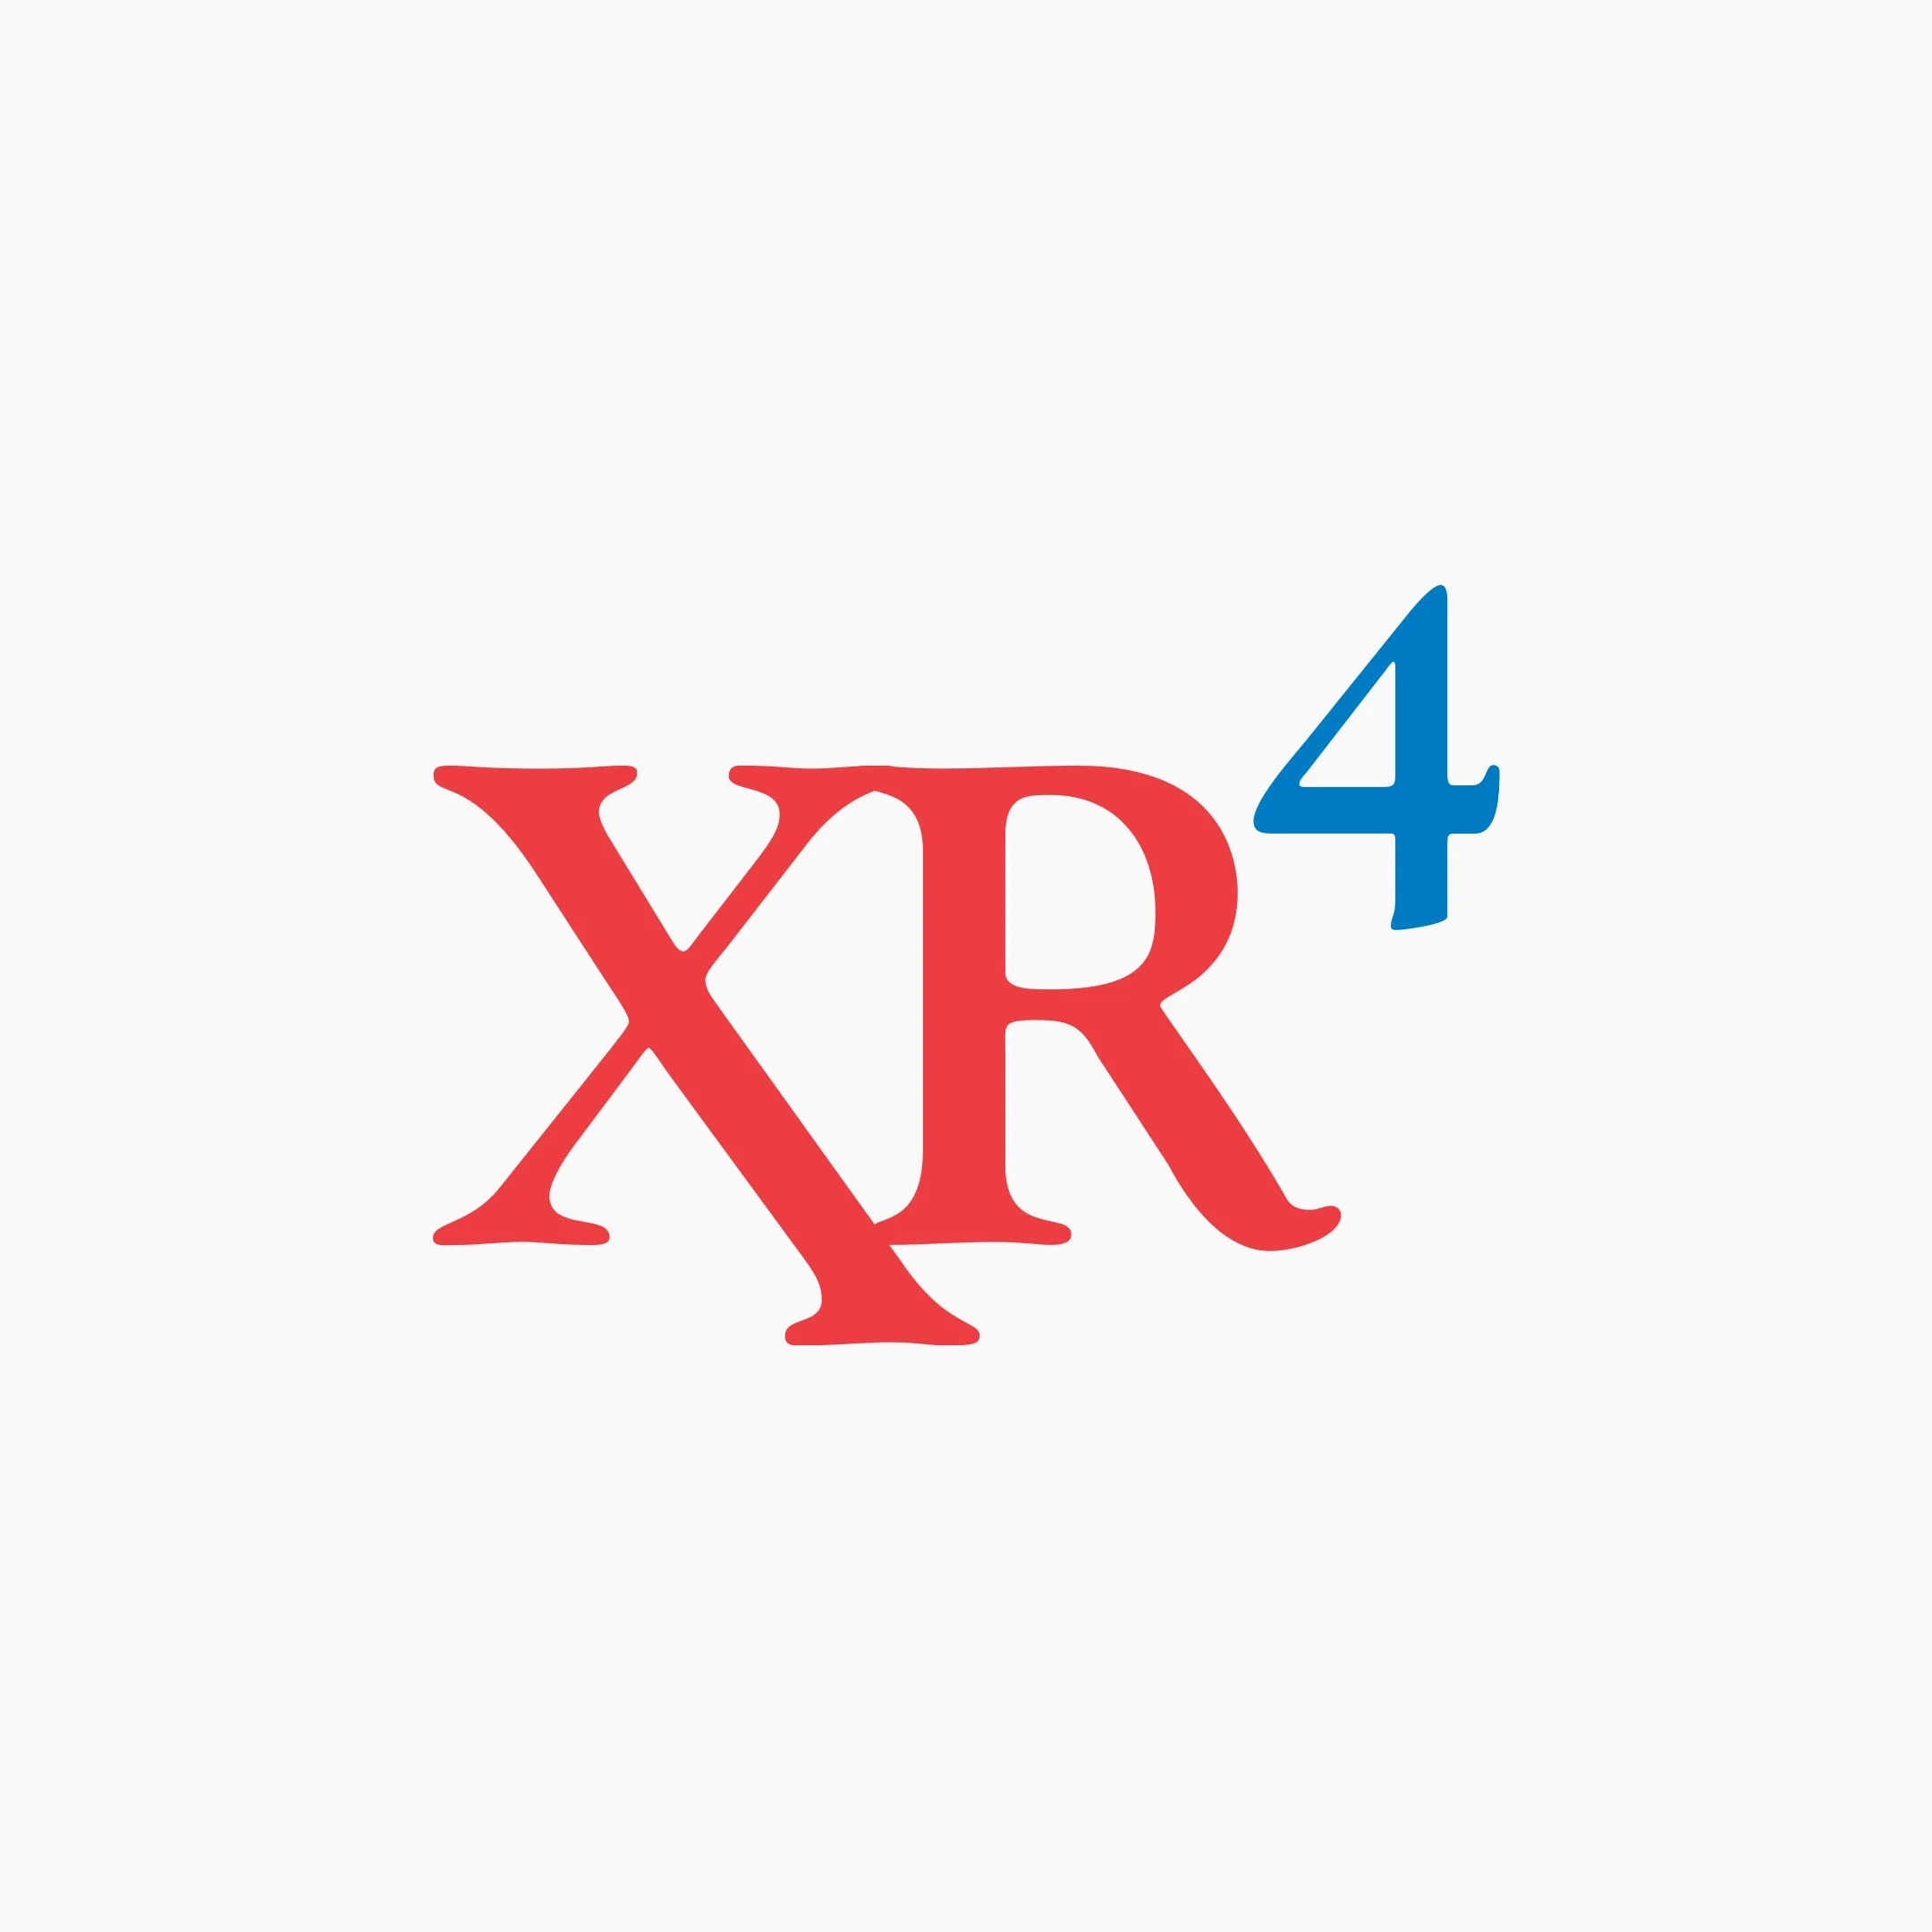 XR4 logo